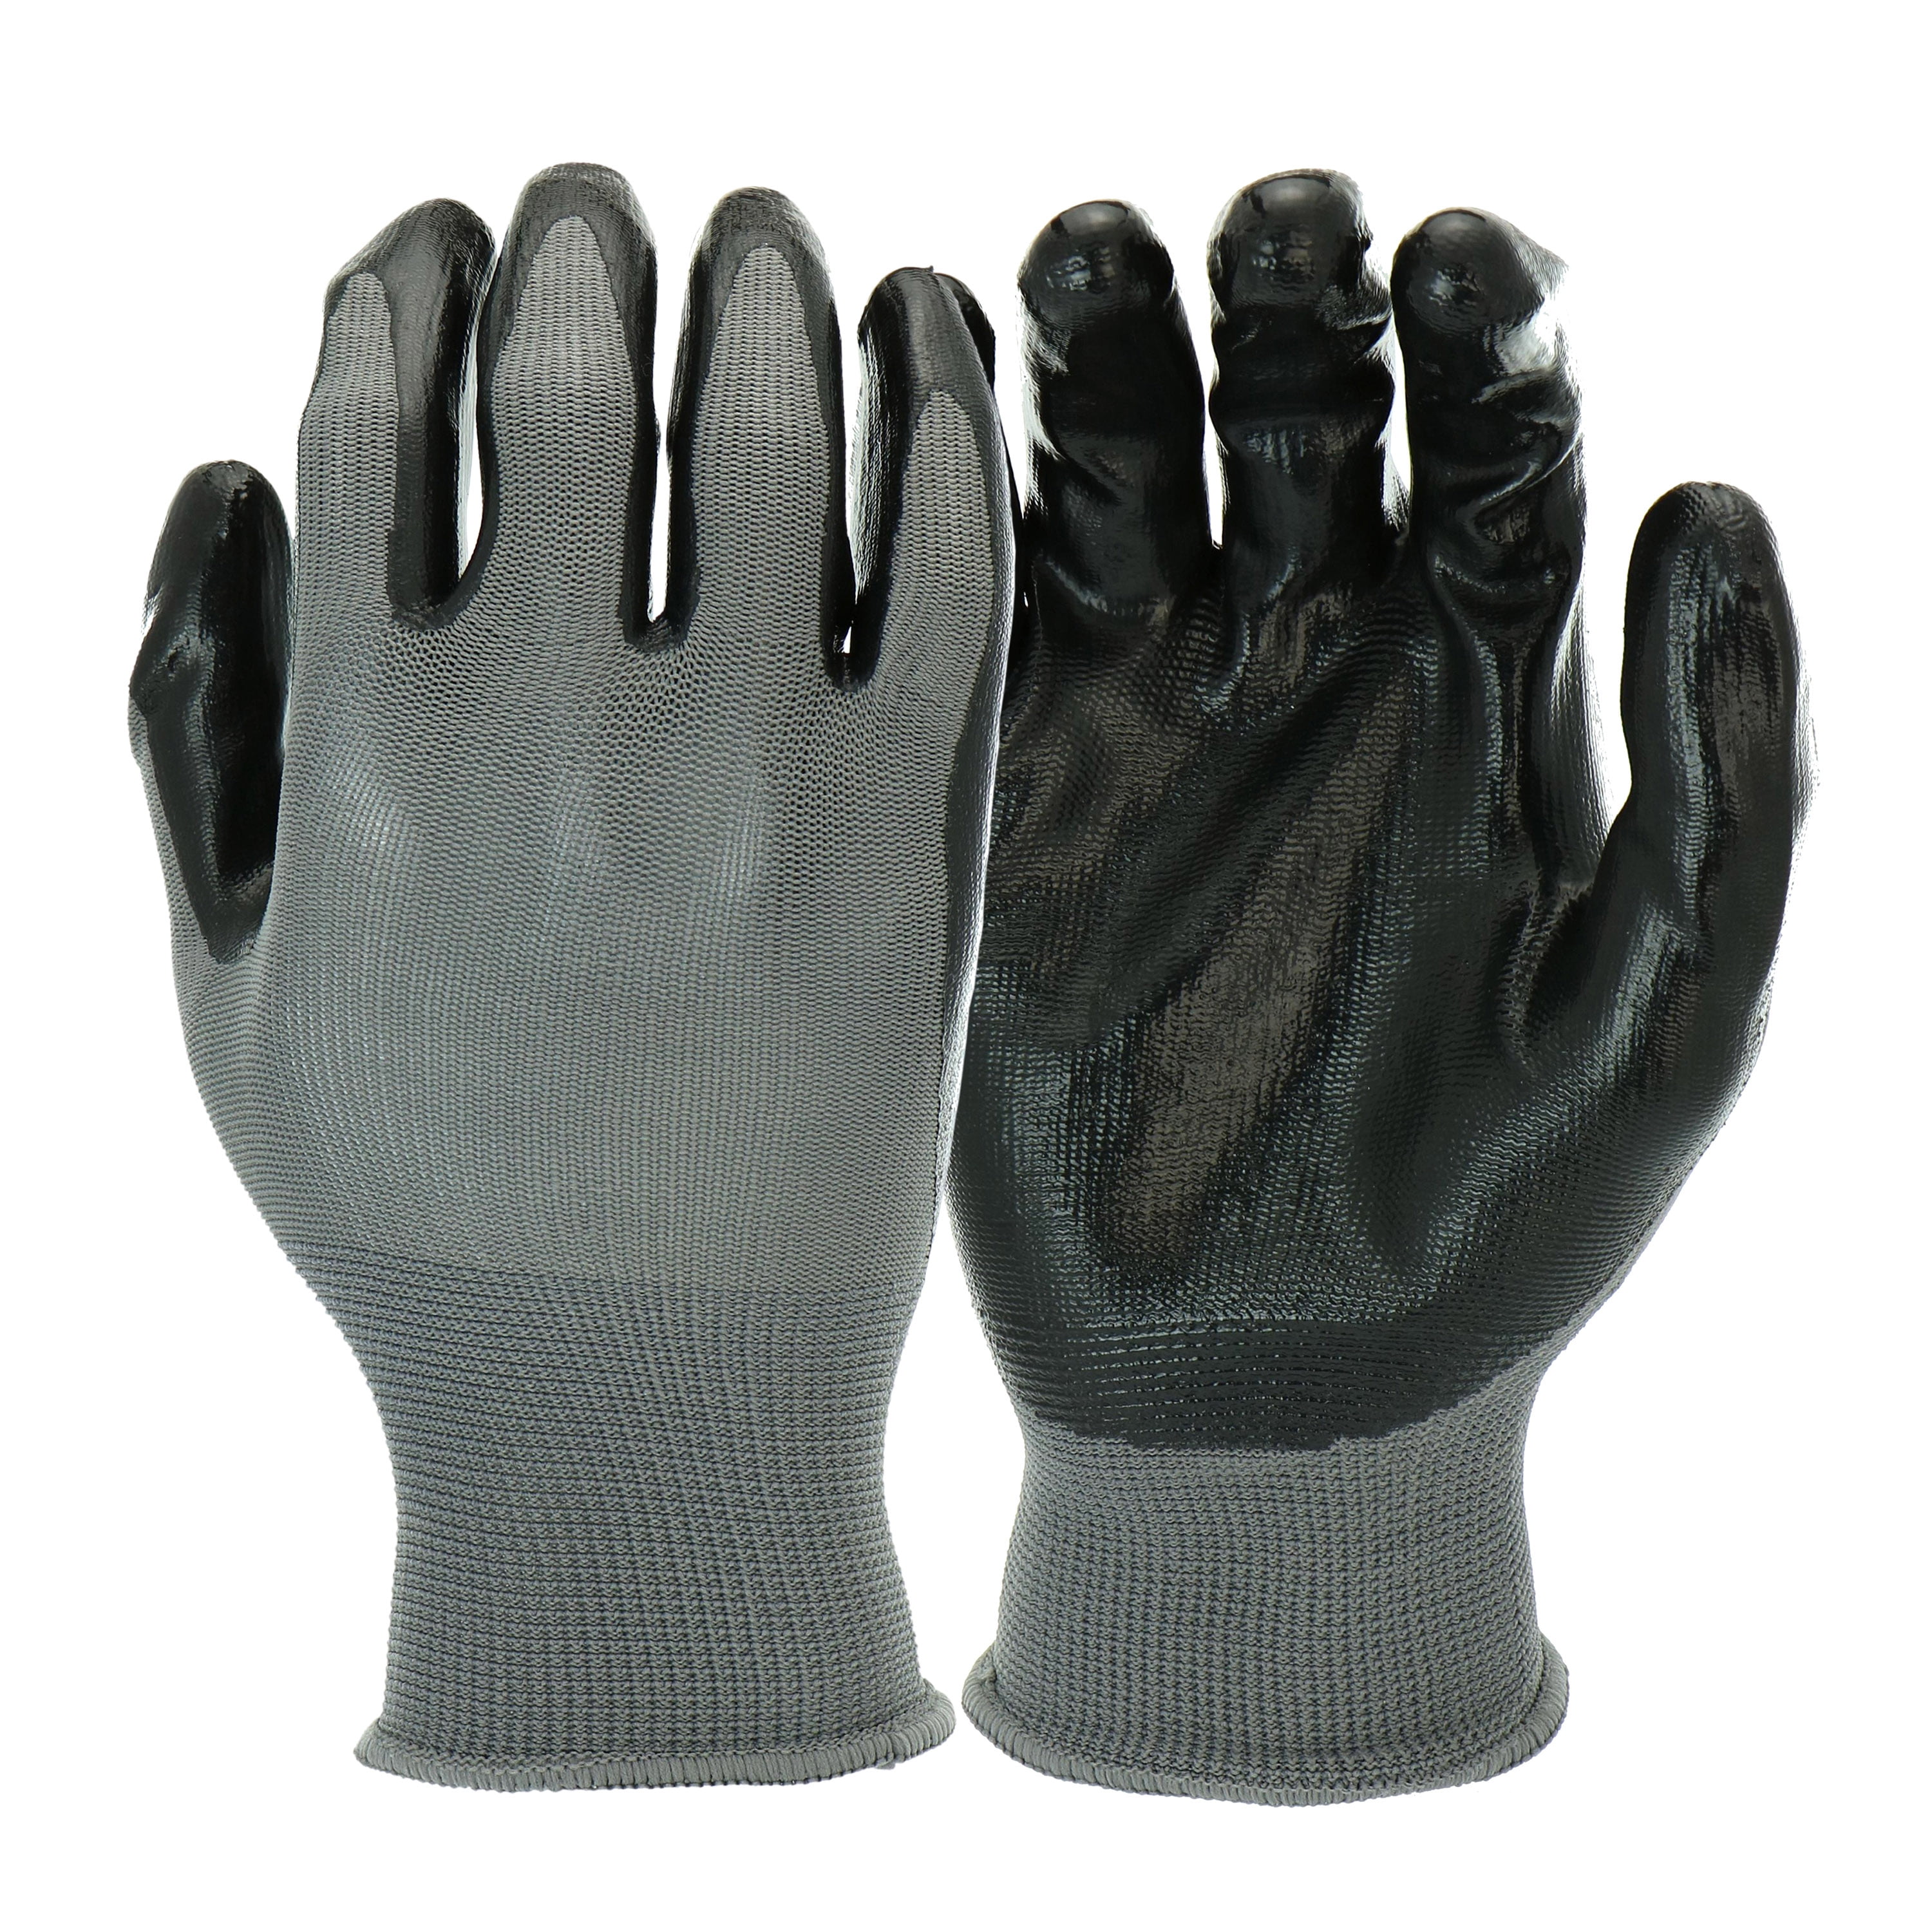 Hyper Tough Nitrile Dipped Safety Work Gloves, 3 Pair, Mechanics Work Gloves, Size Large, Black